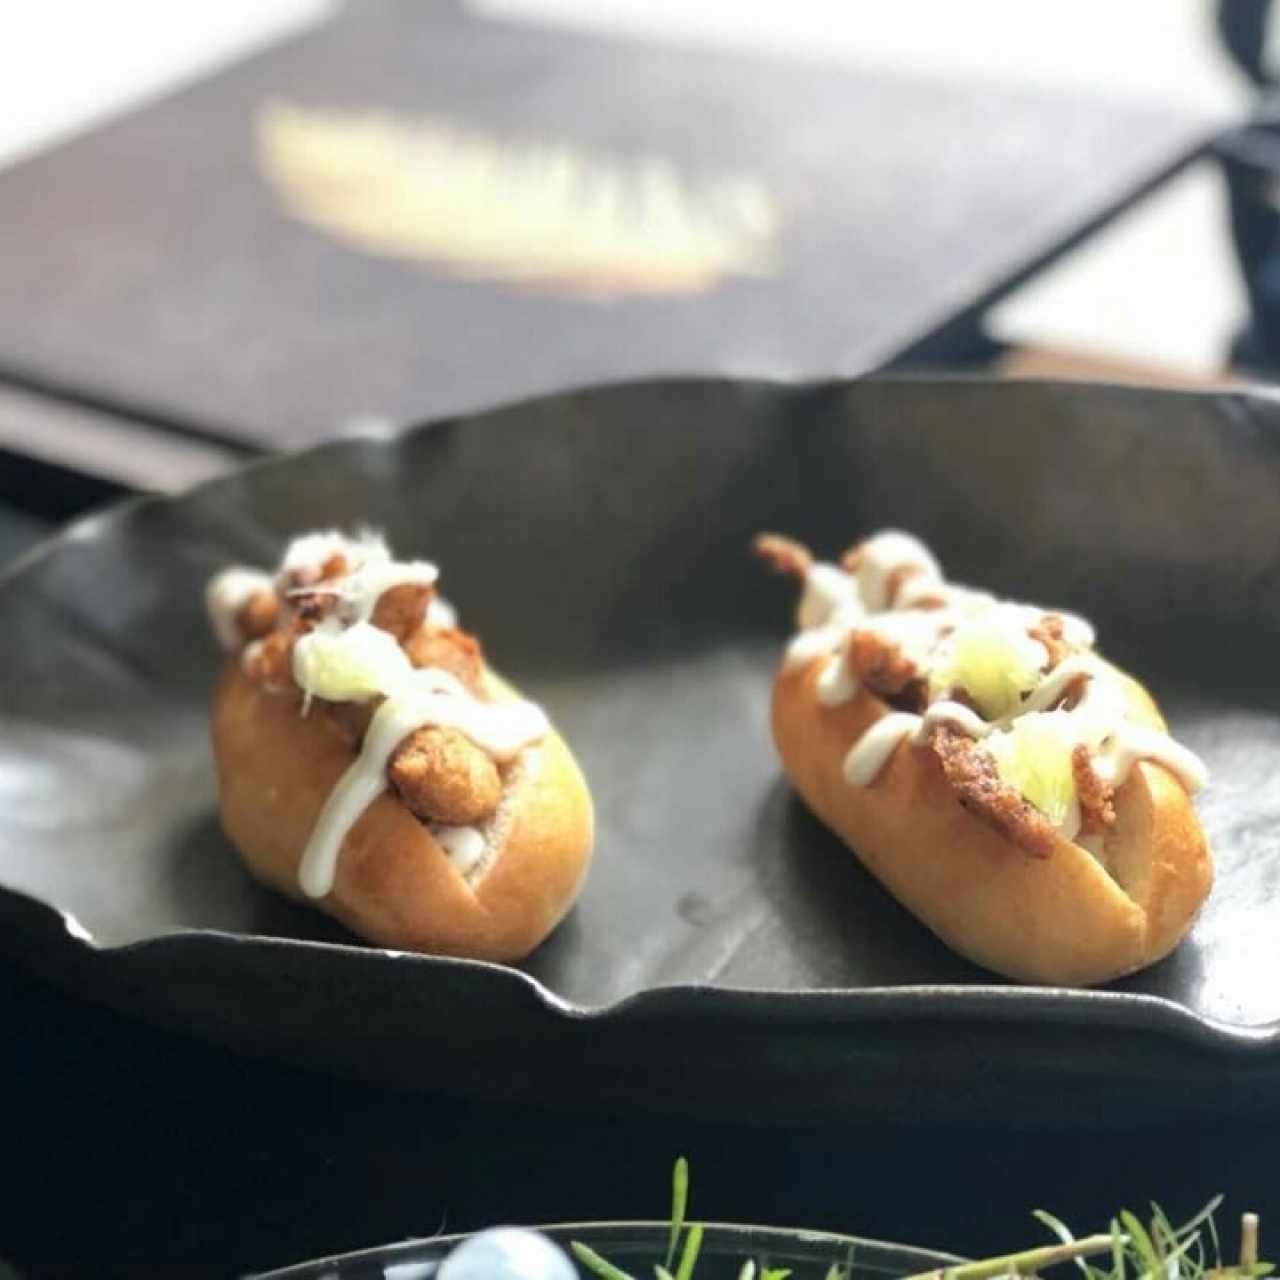 Hotdog de calamares